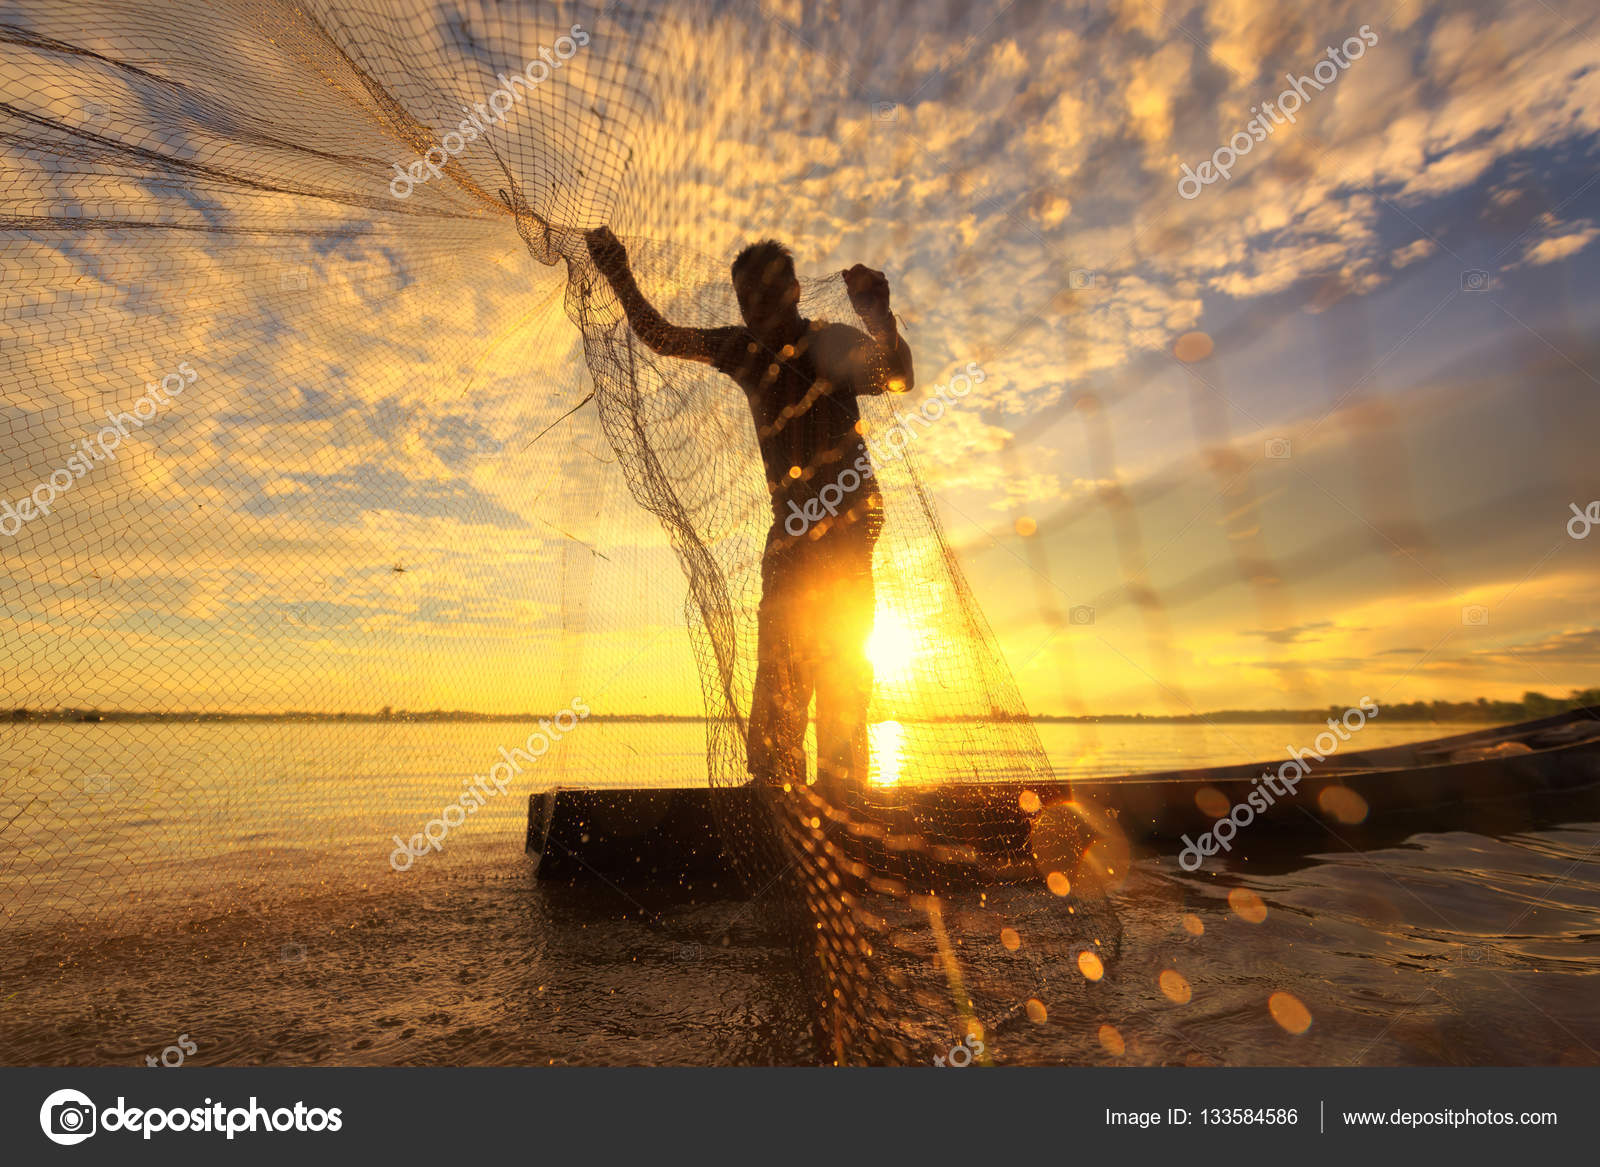 https://st3.depositphotos.com/2366517/13358/i/1600/depositphotos_133584586-stock-photo-silhouette-of-traditional-fisherman-throwing.jpg